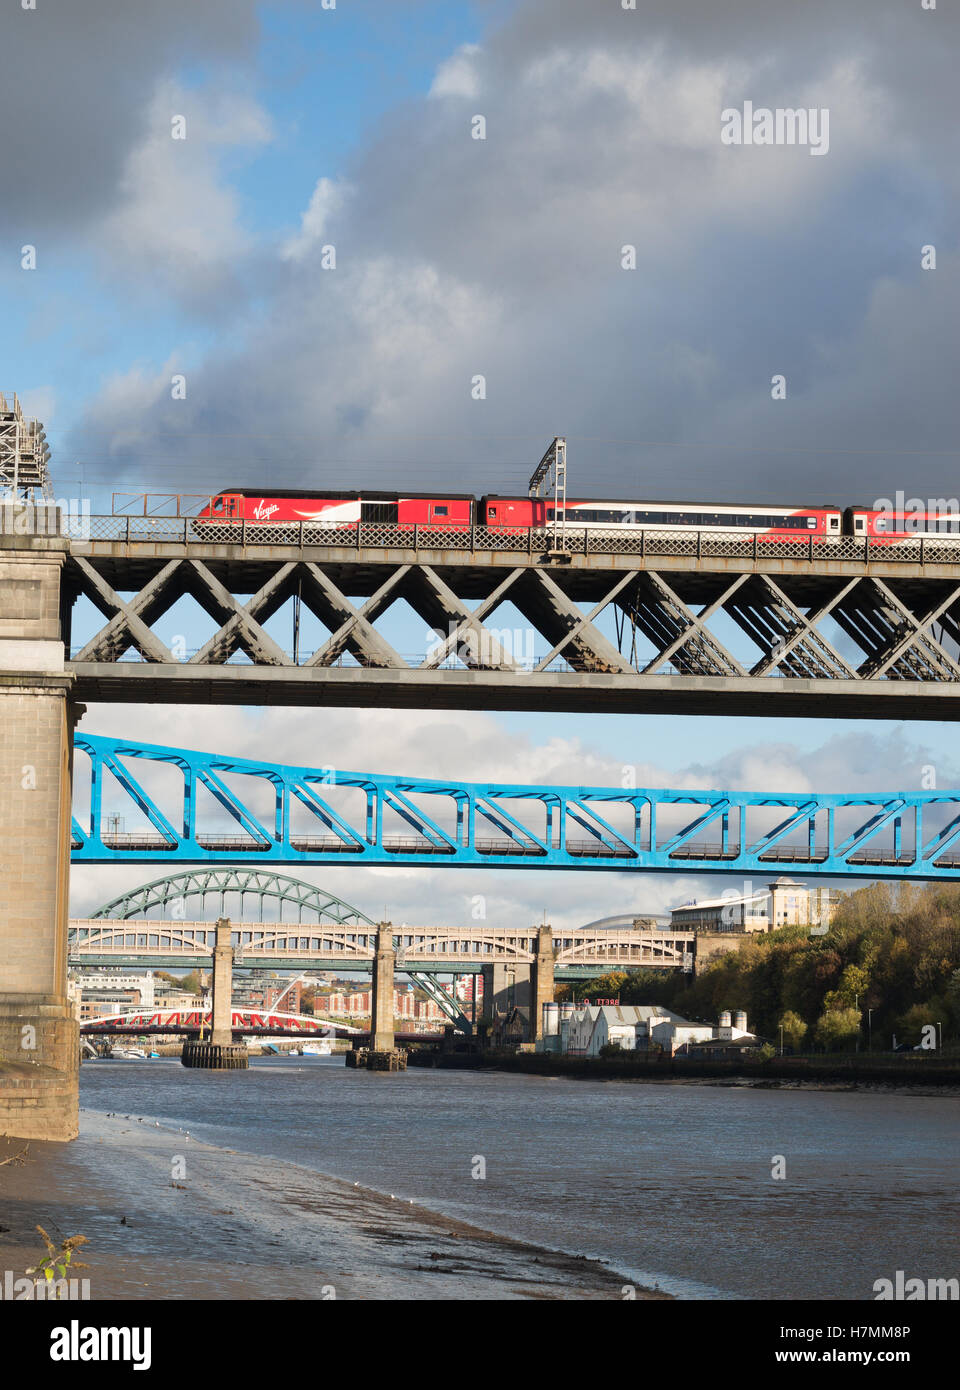 Virgin High Speed Train crossing the river Tyne on the KIng Edward bridge, Newcastle upon Tyne, England, UK Stock Photo